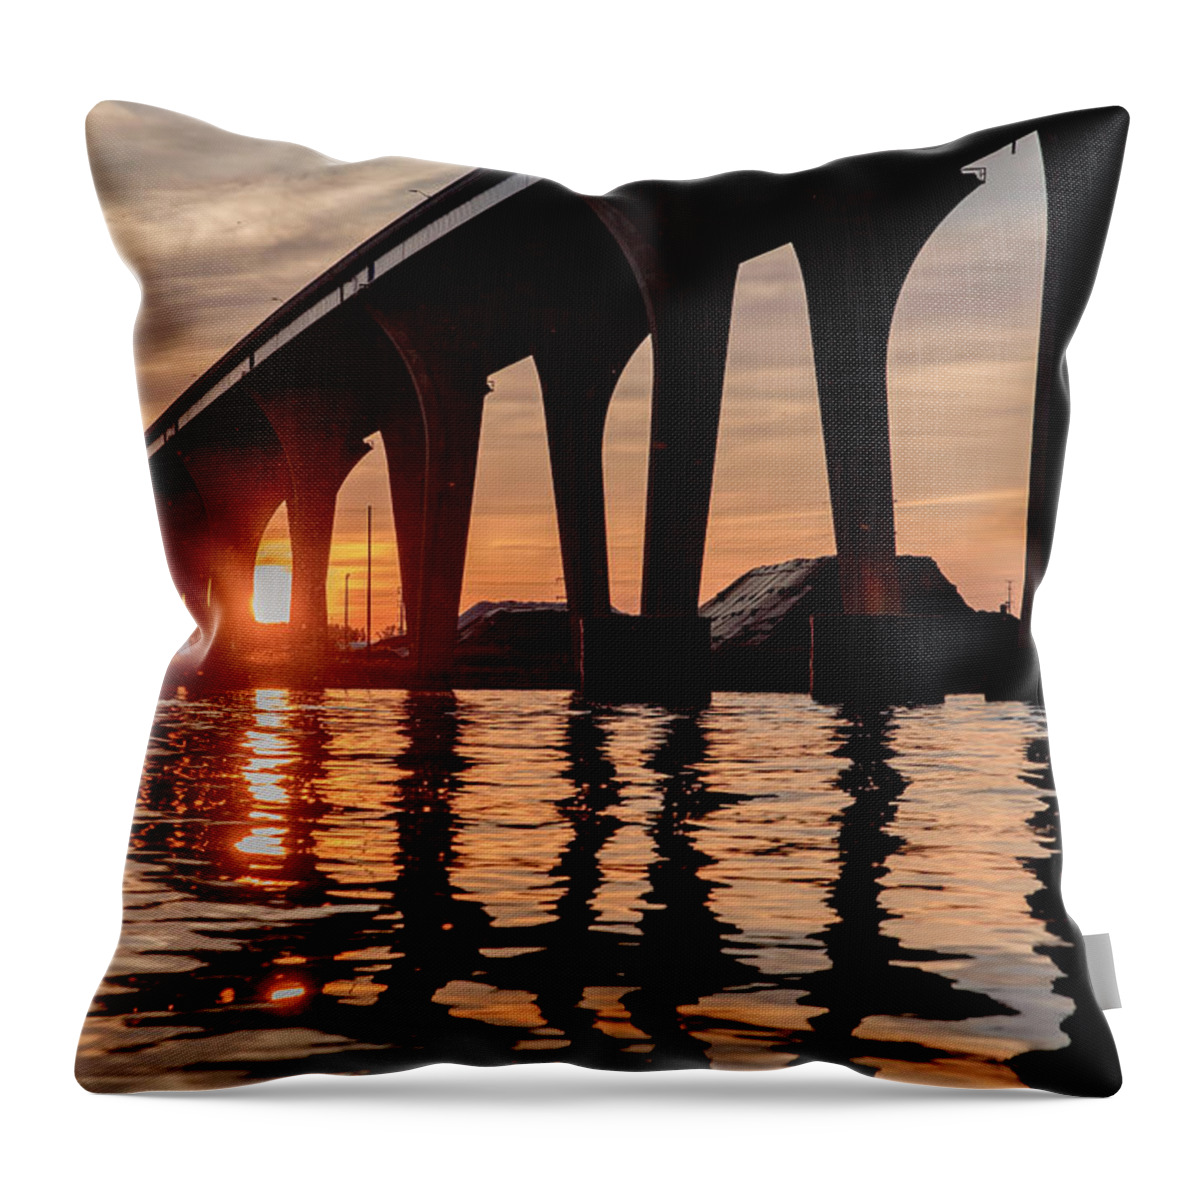 Sunset Throw Pillow featuring the photograph Under Leo Frigo at Dusk by Nikki Vig